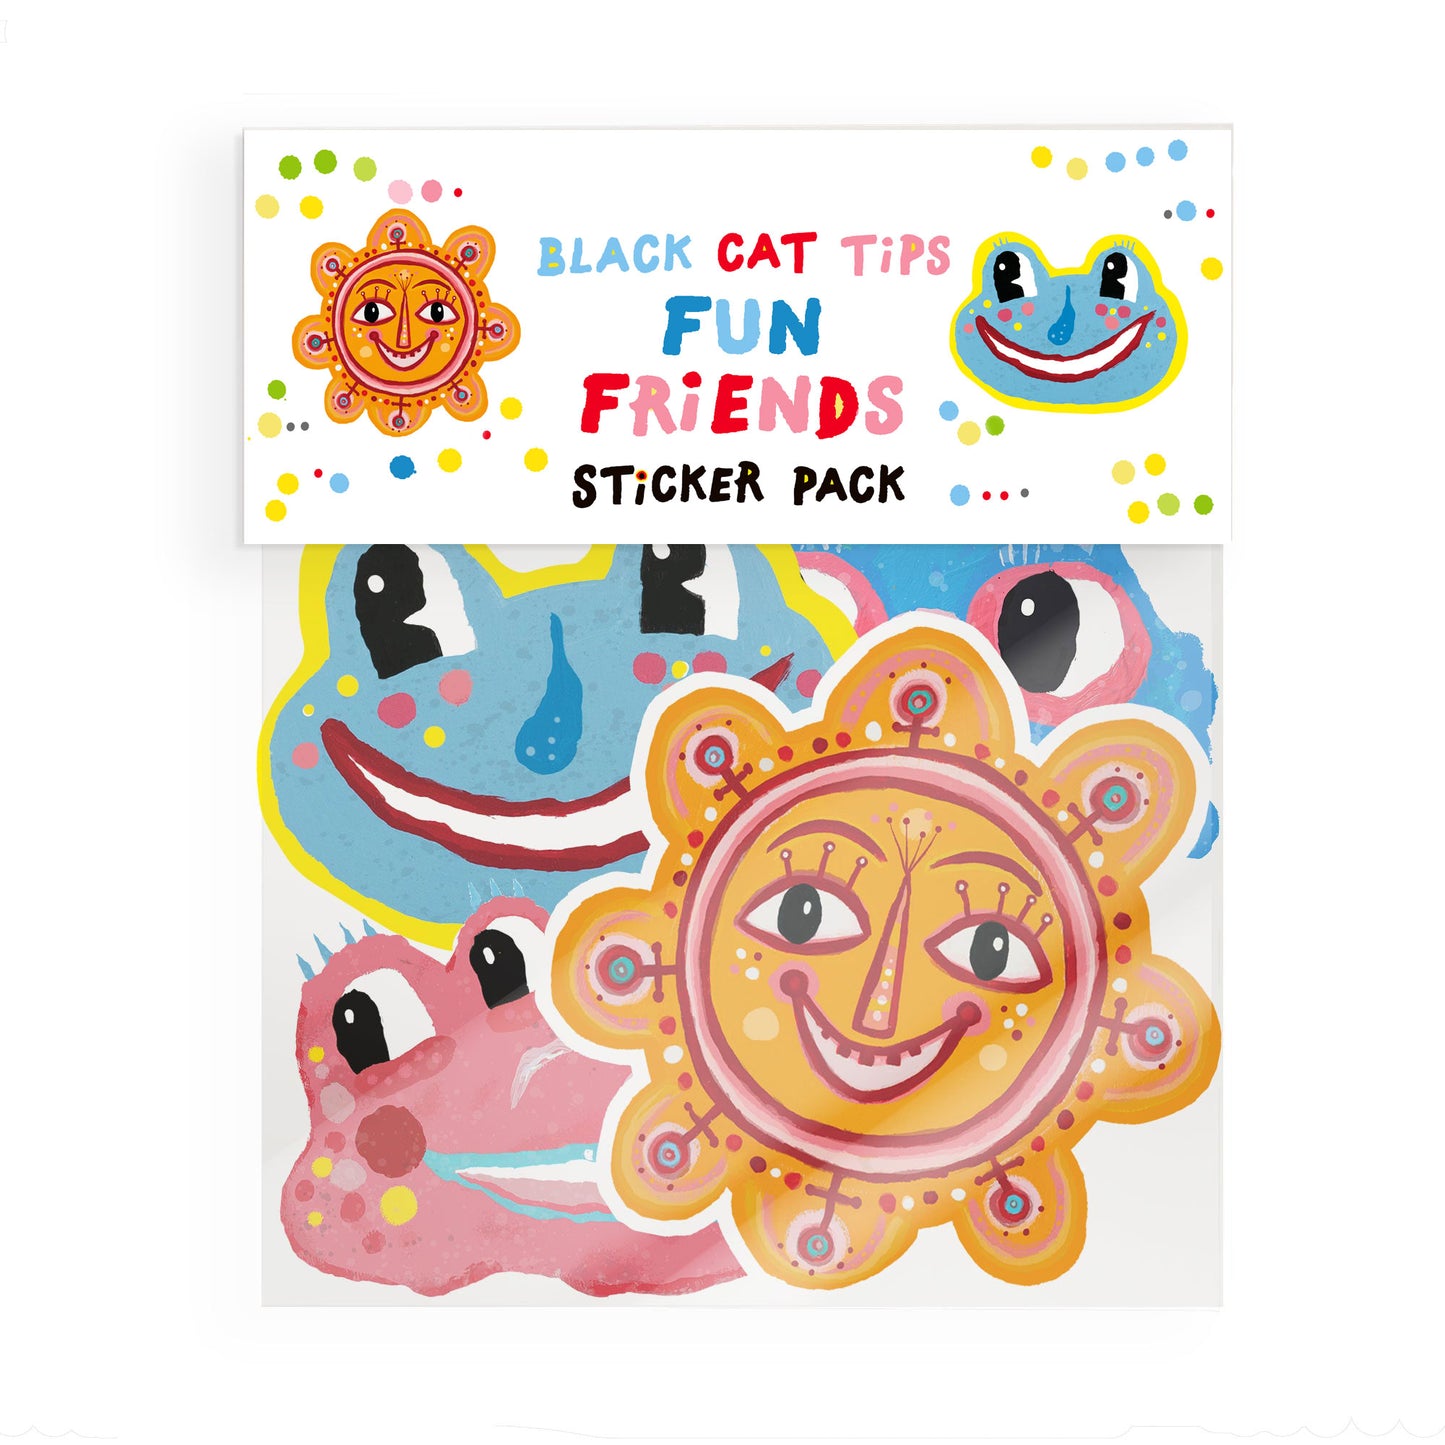 BlackCatTips Sticker Pack - Fun Friends